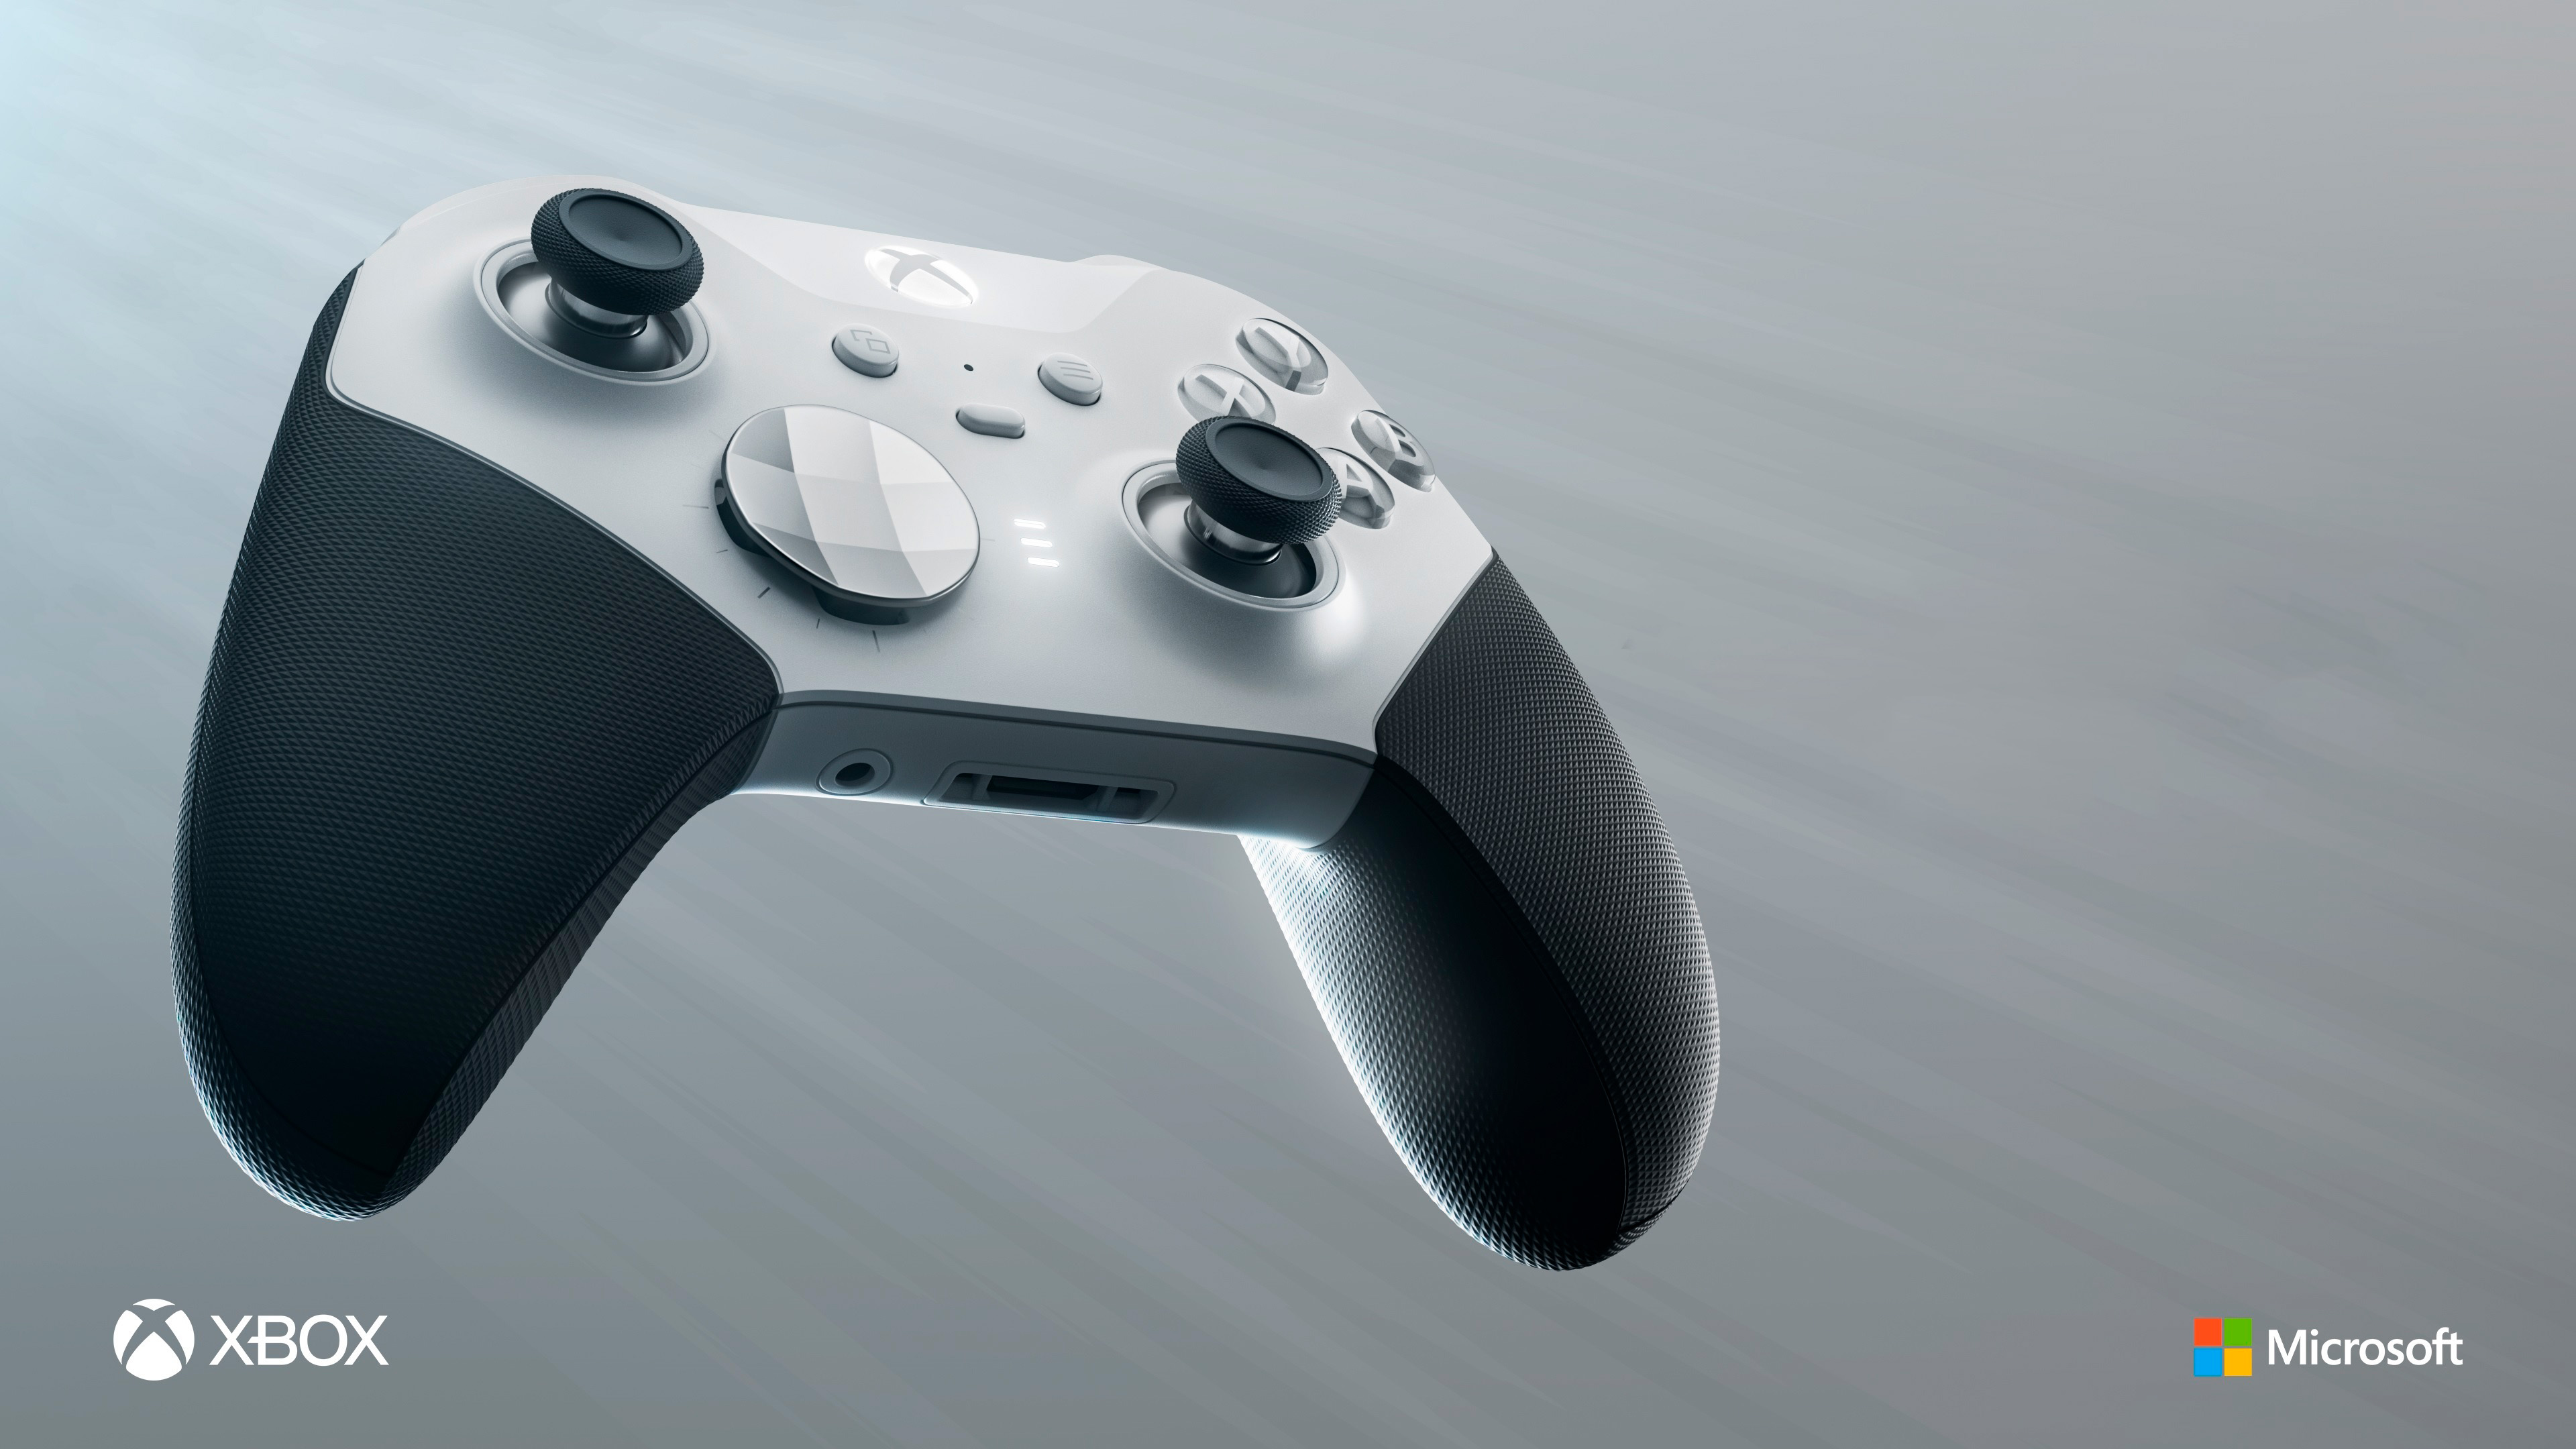 Microsoft reveals the Xbox Elite Wireless Controller Series 2 – Core for Xbox